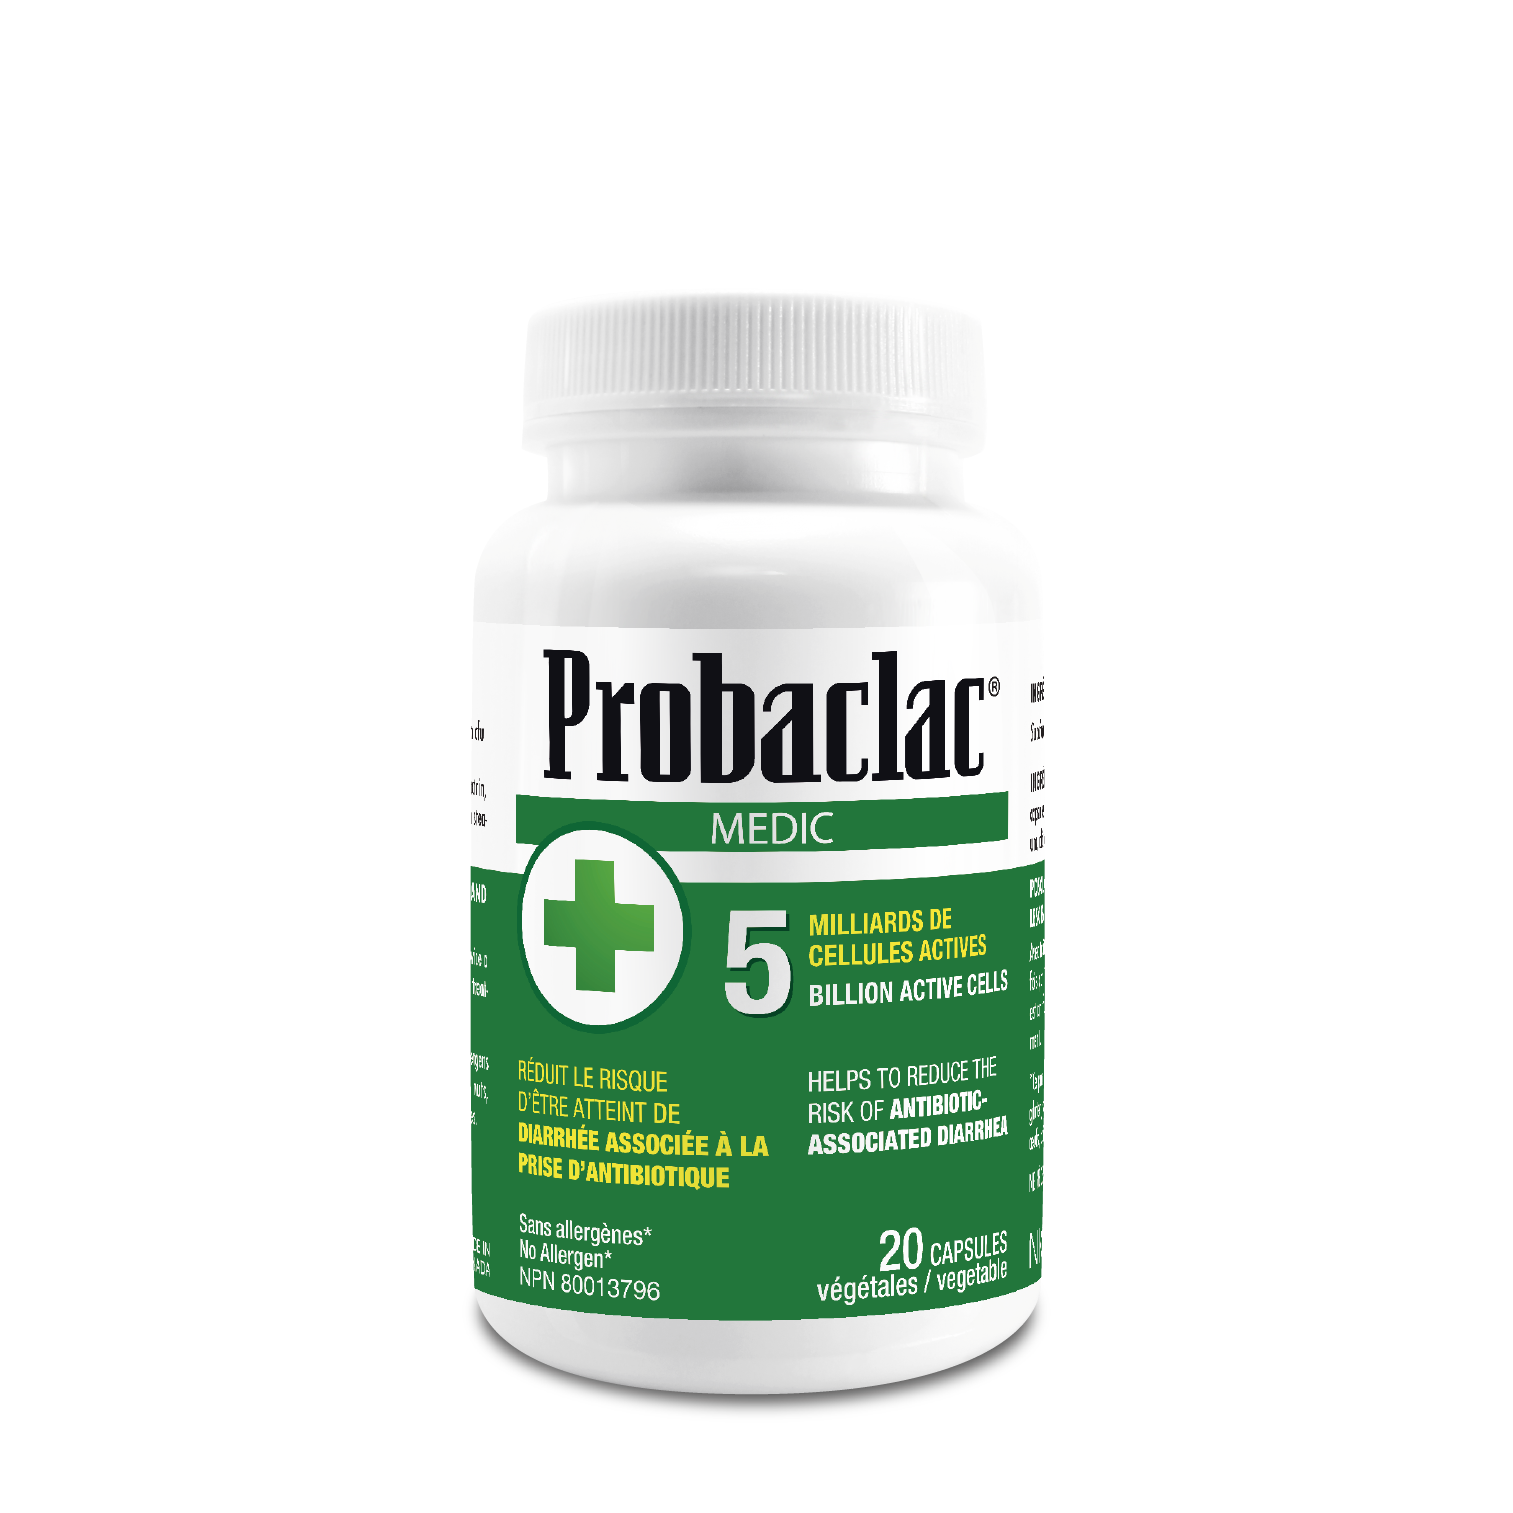 Antibiotics Probiotics Probaclac Medic Formula